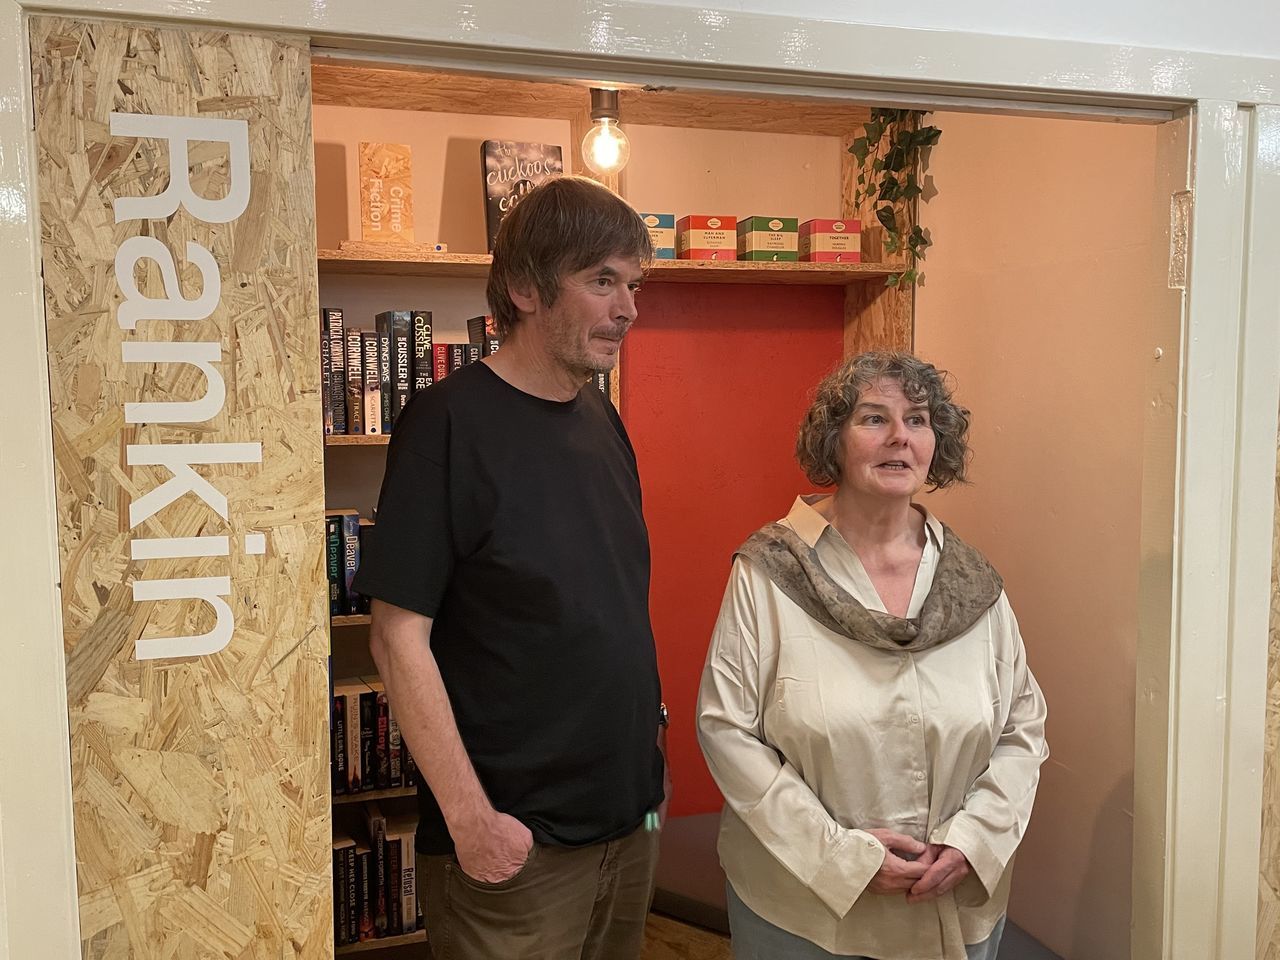 Ian Rankin joins Rachel Cowan at the library's launch.